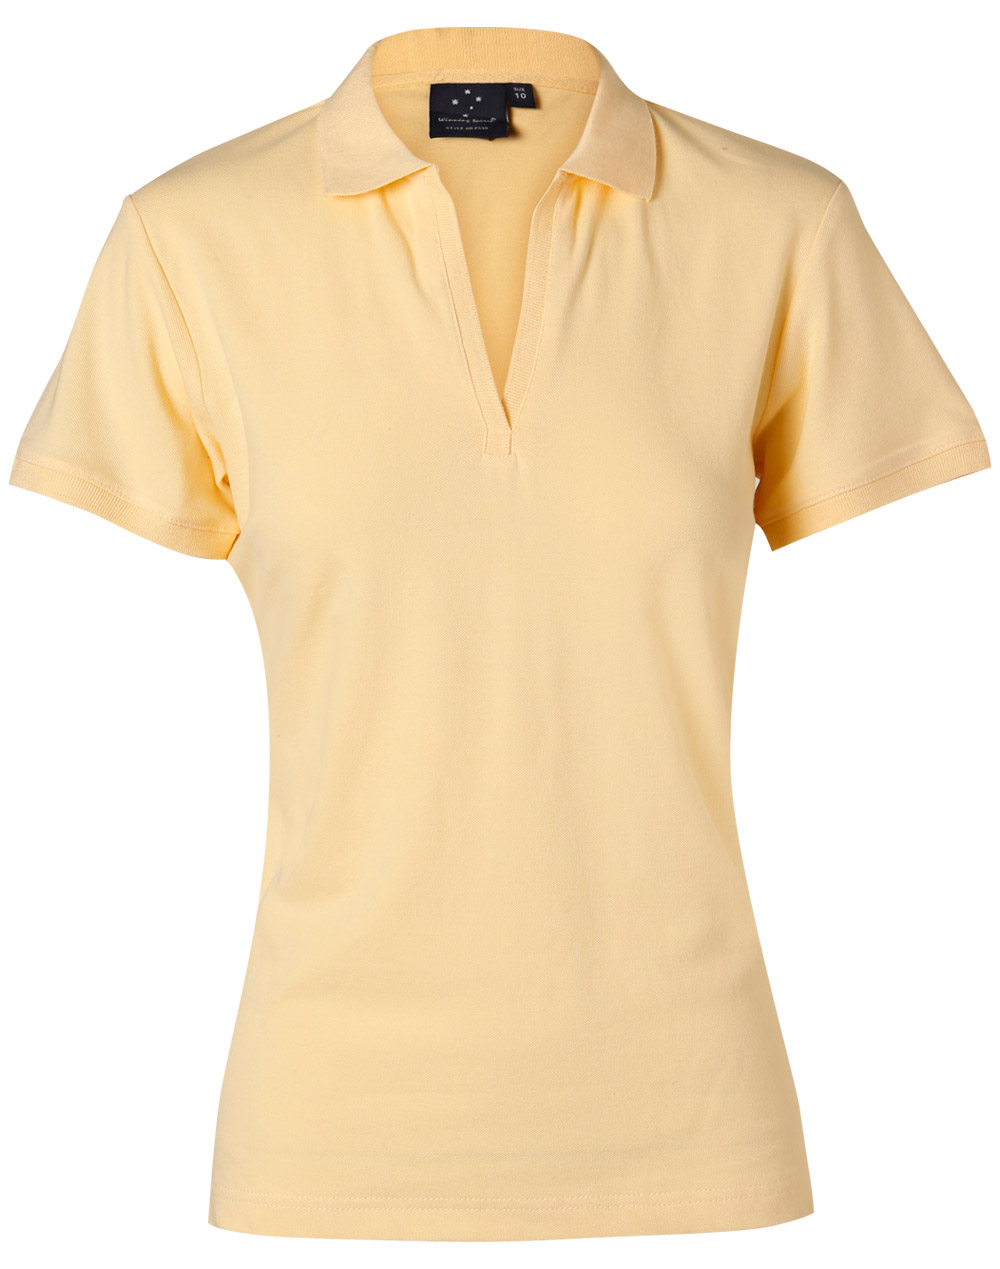 Custom (Green) Long Beach Ledies Polo Shirts Online Perth Australia